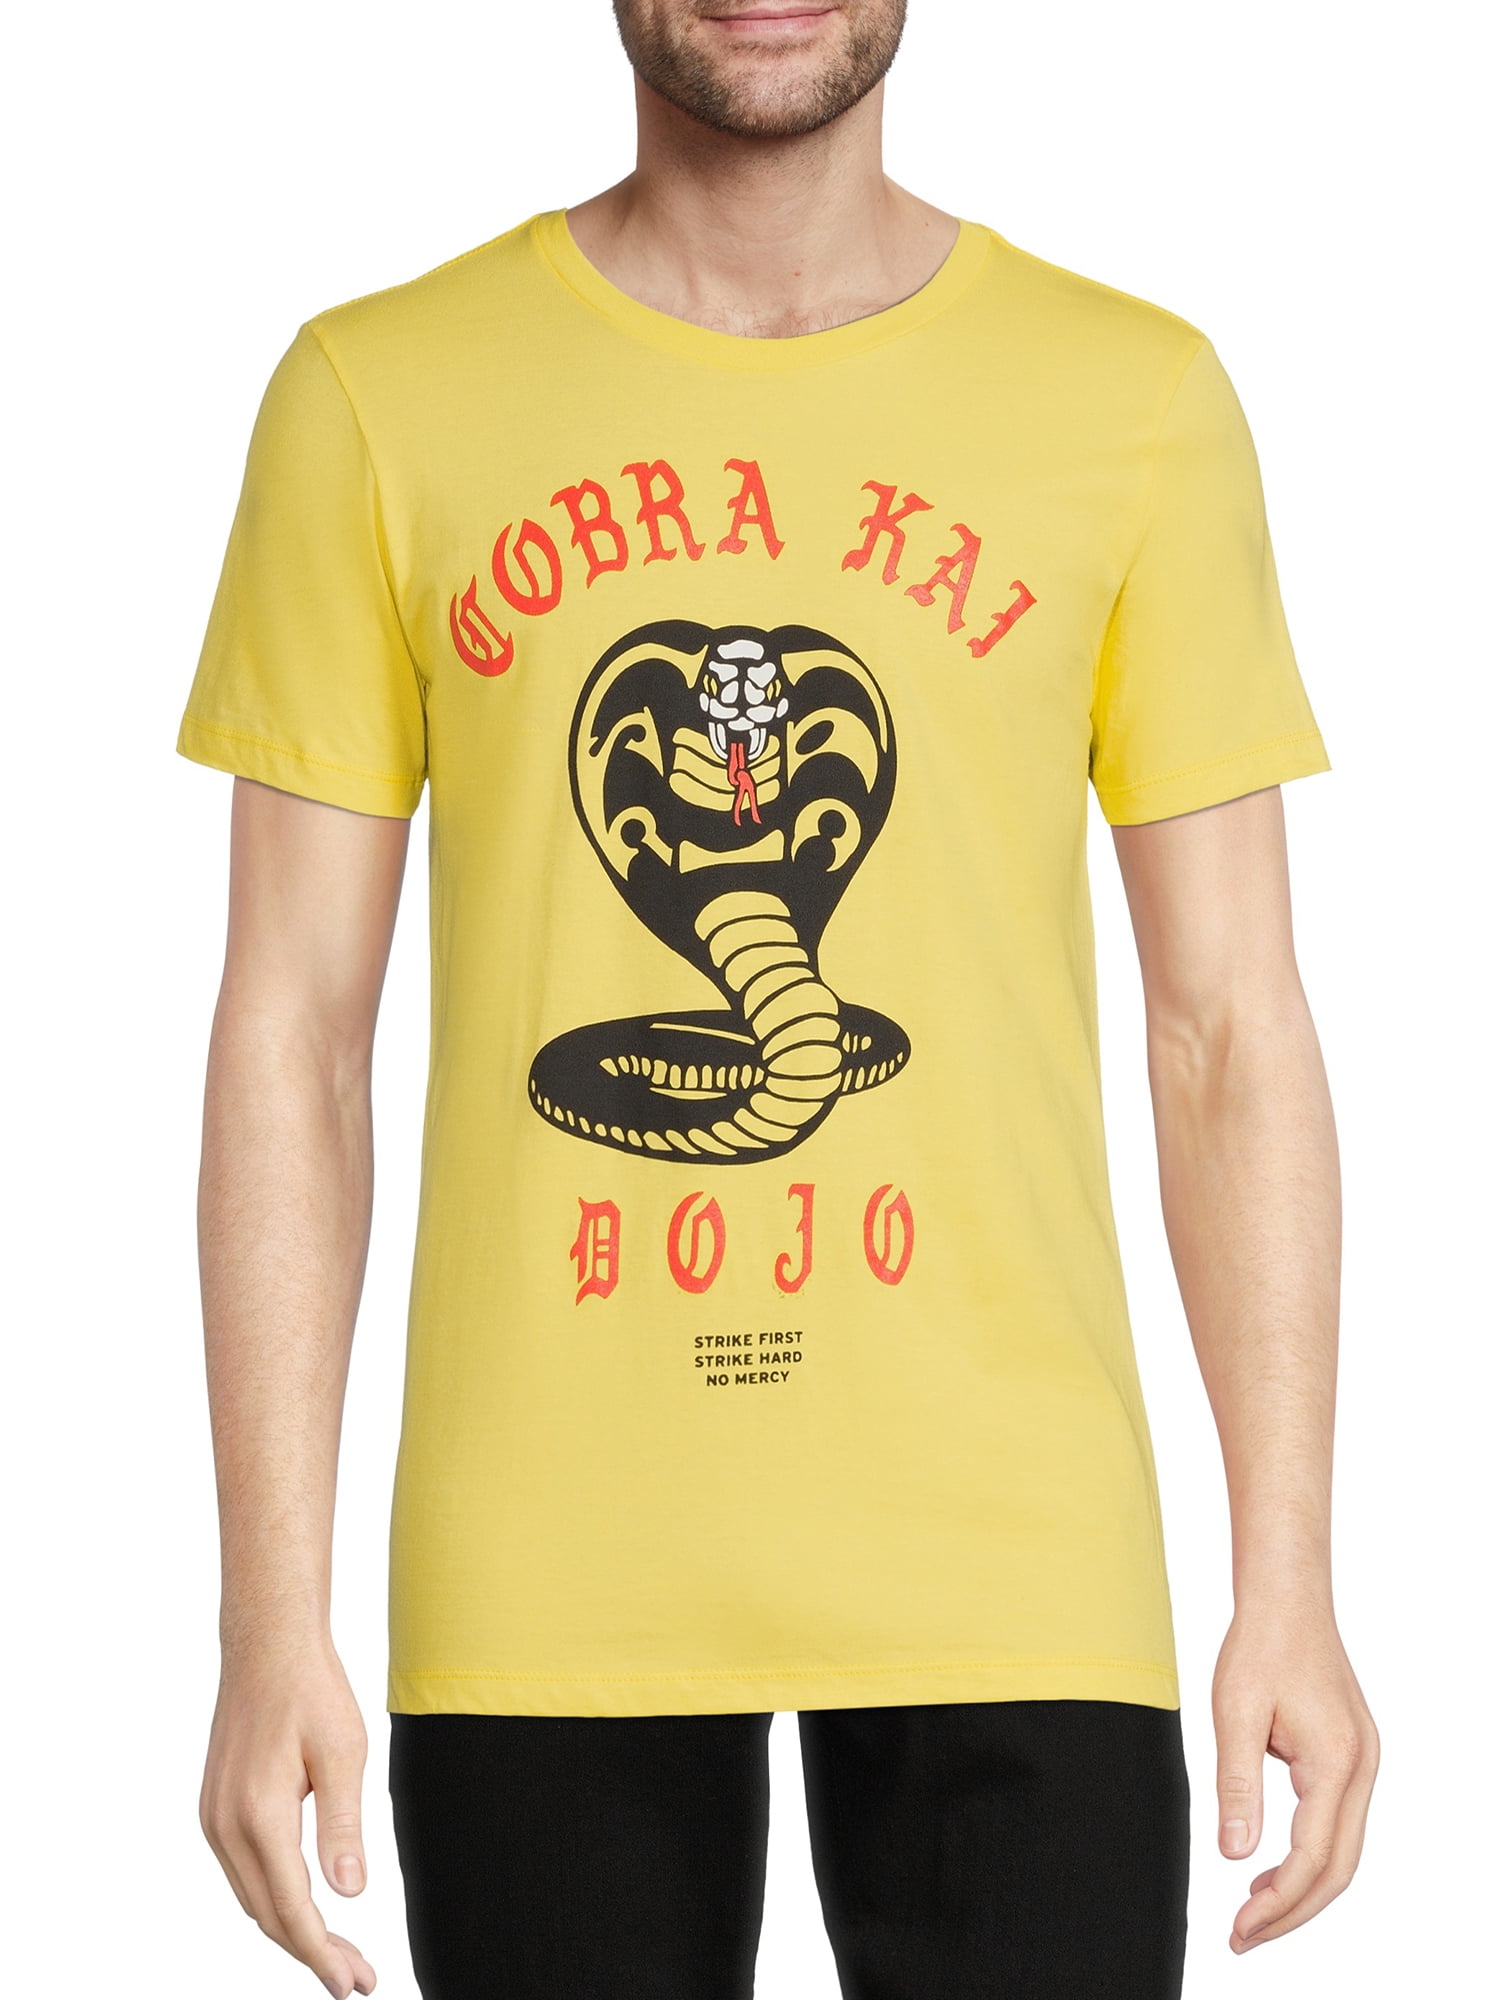 Cobra Kai Men's & Big Men's Yellow Graphic Tee with Short Sleeves, S ...